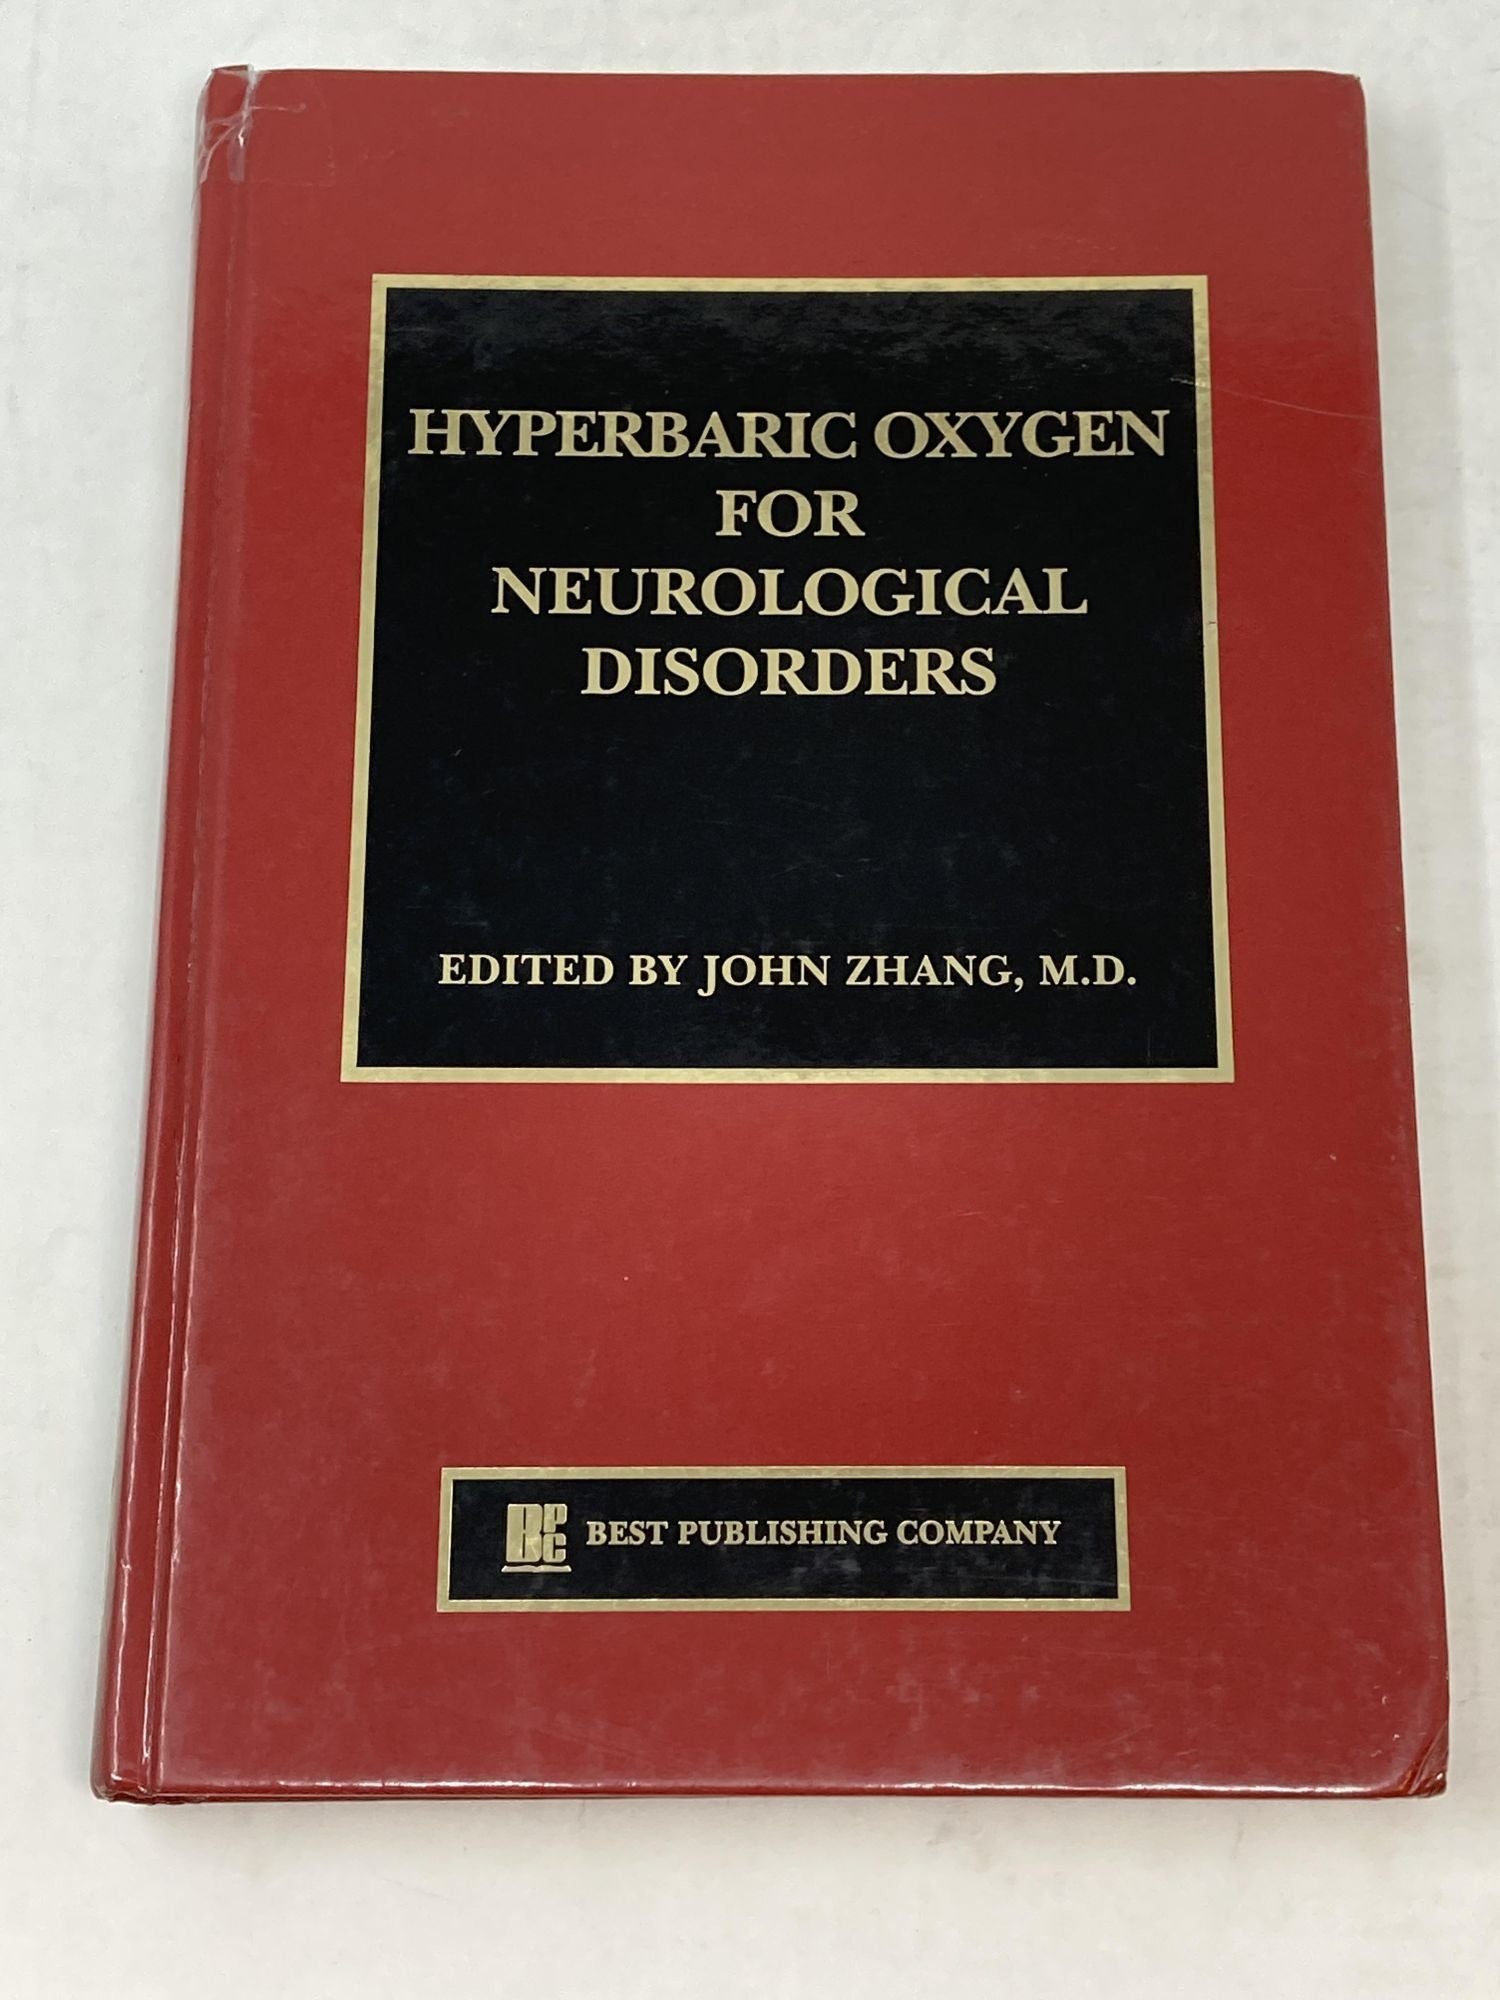 Zhang, John - Hyperbaric Oxygen for Neurological Disorders